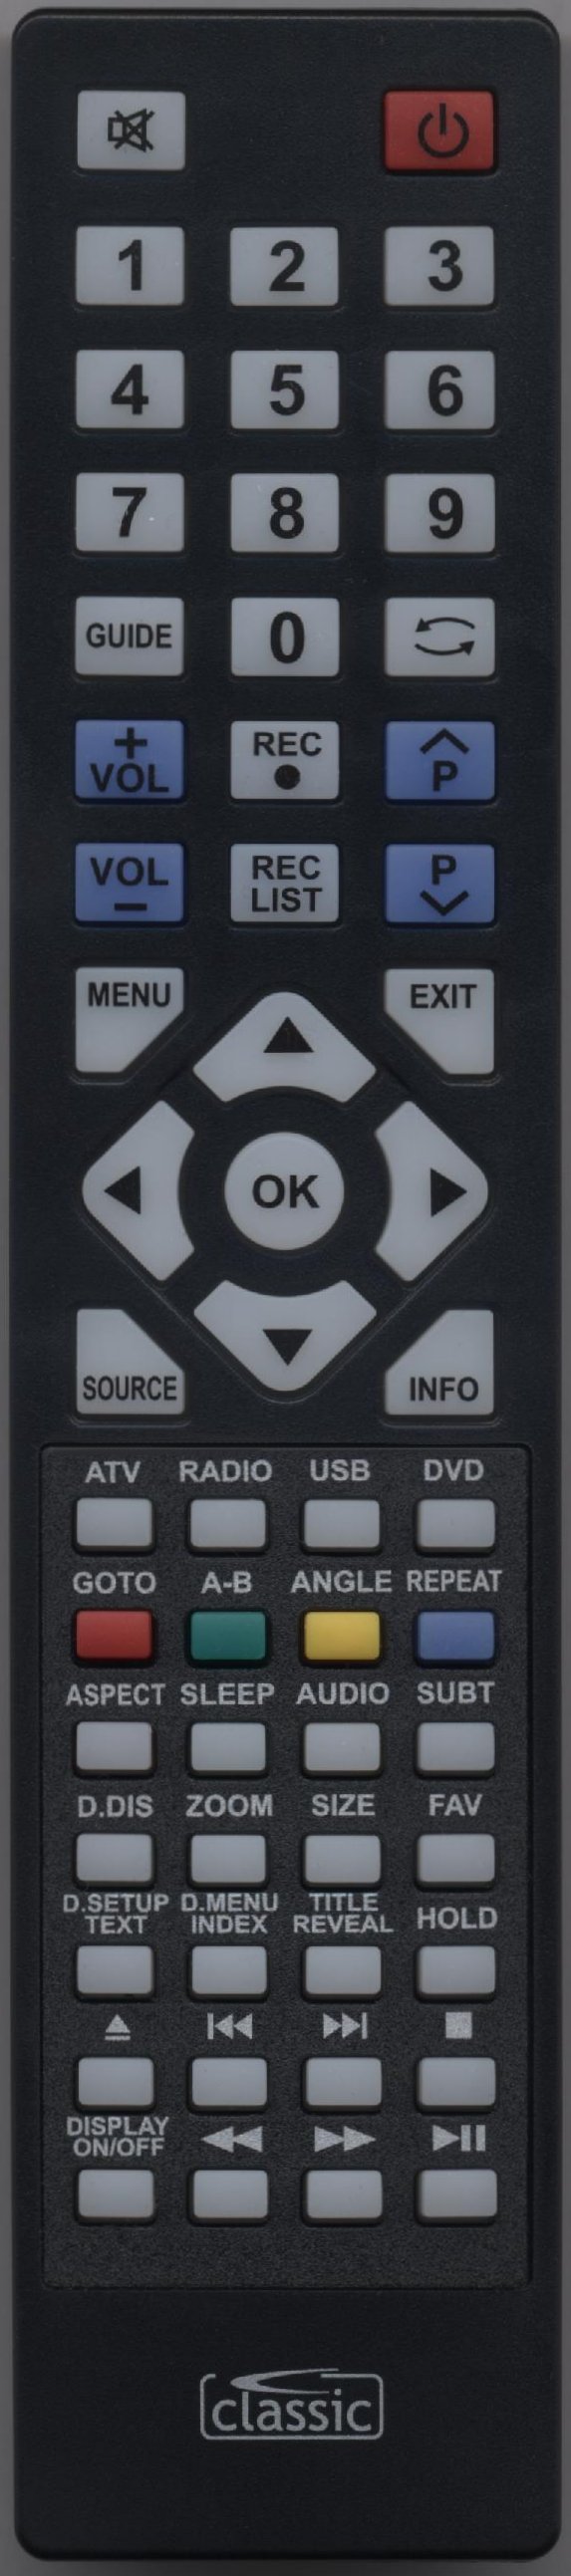 UMC X23/51E Remote Control Alternative